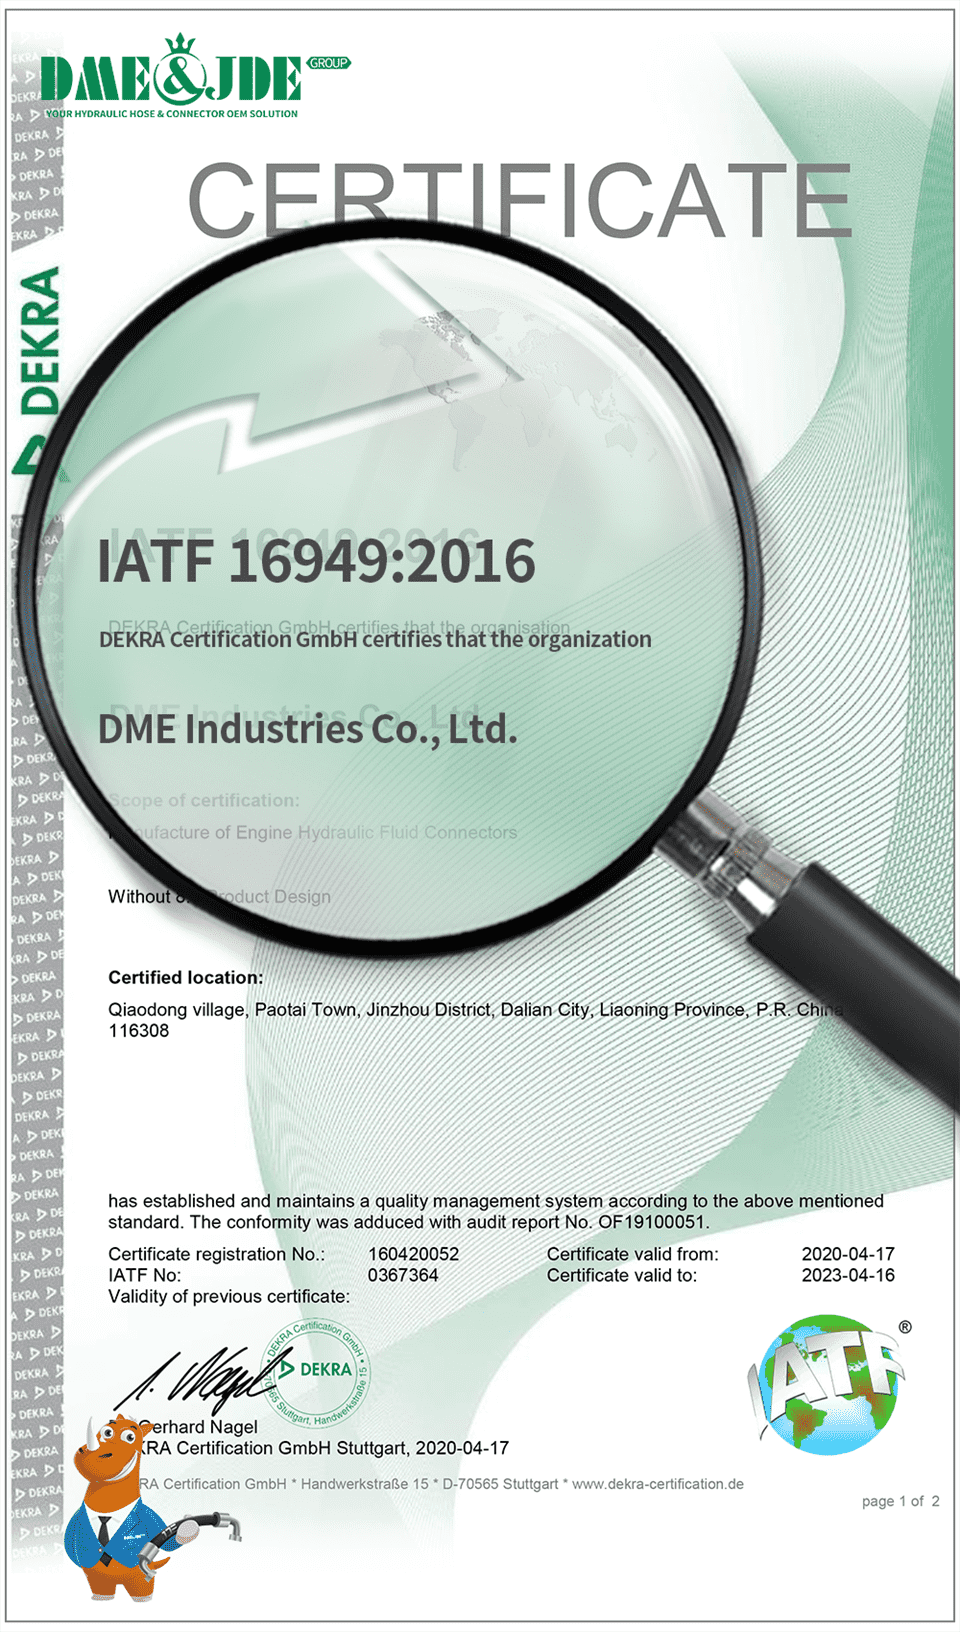 An America IATF certification cover